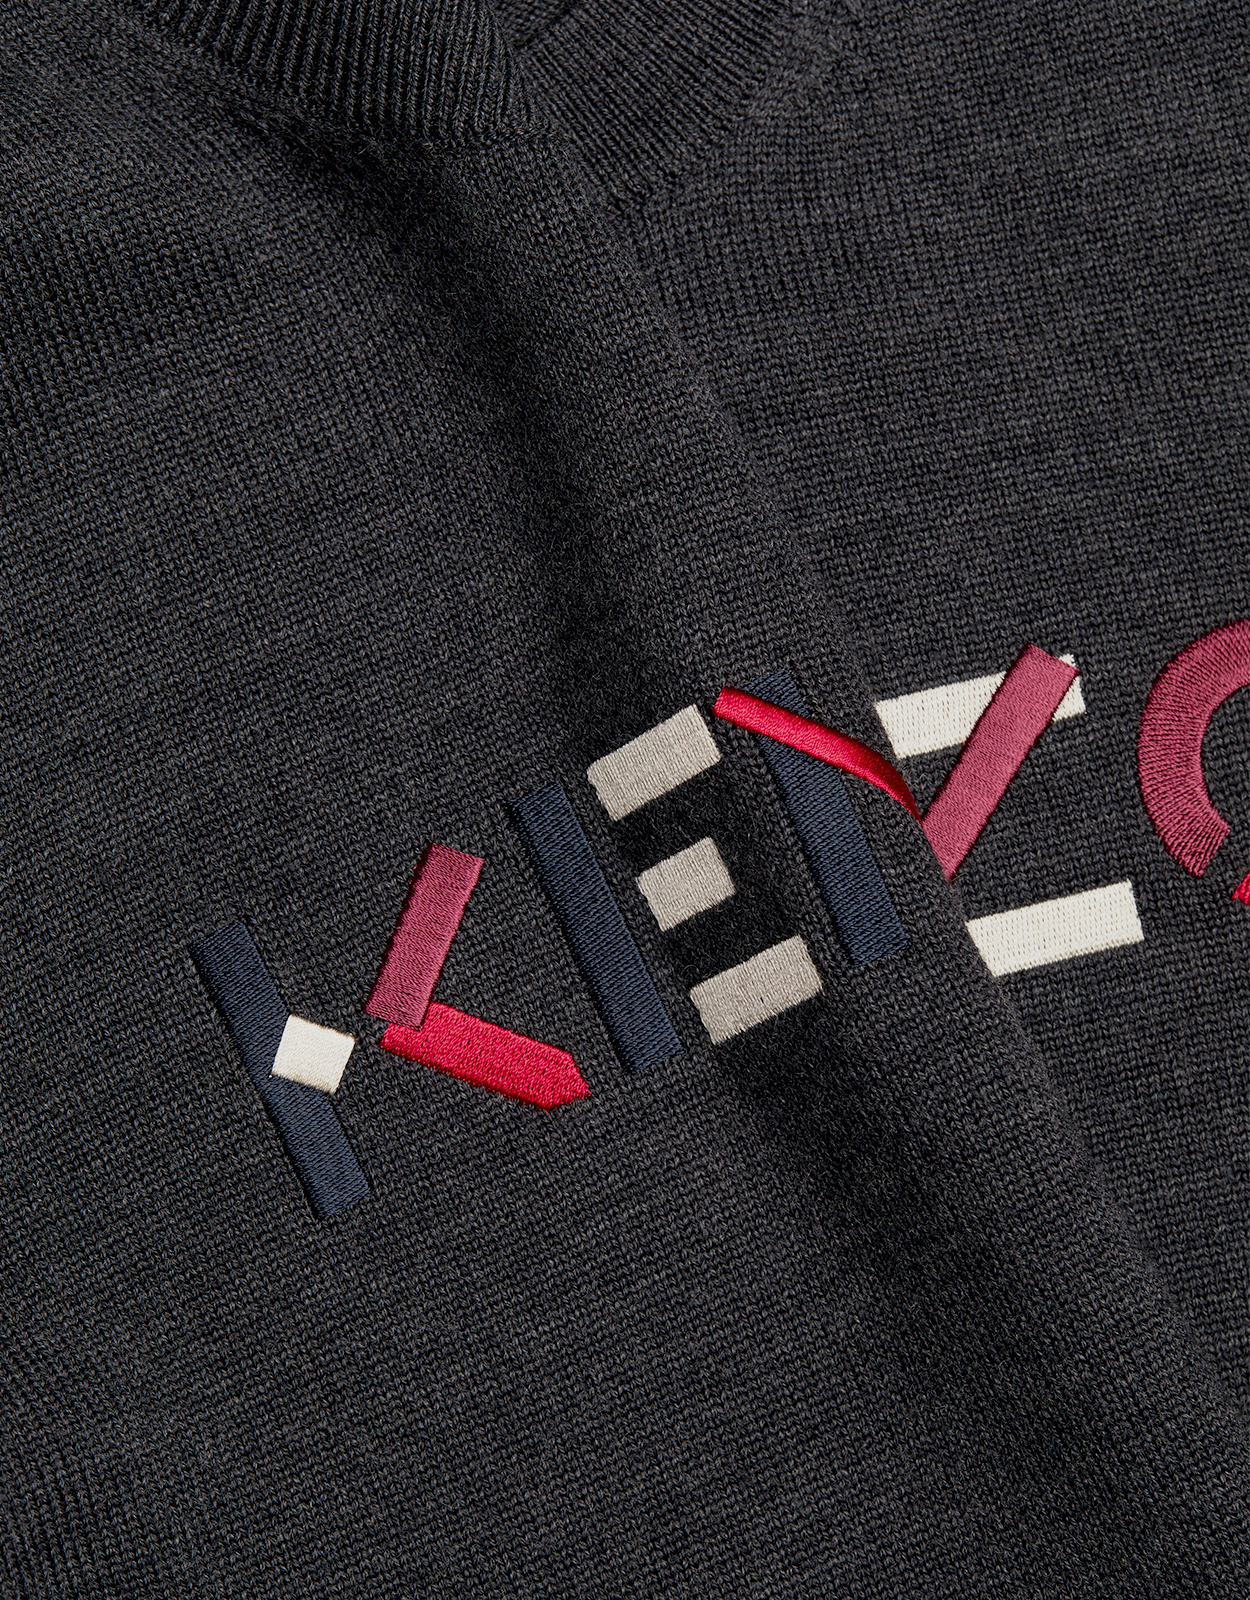 Kenzo Kenzo Logo Sweater (Knitwear,Sweaters) IFCHIC.COM